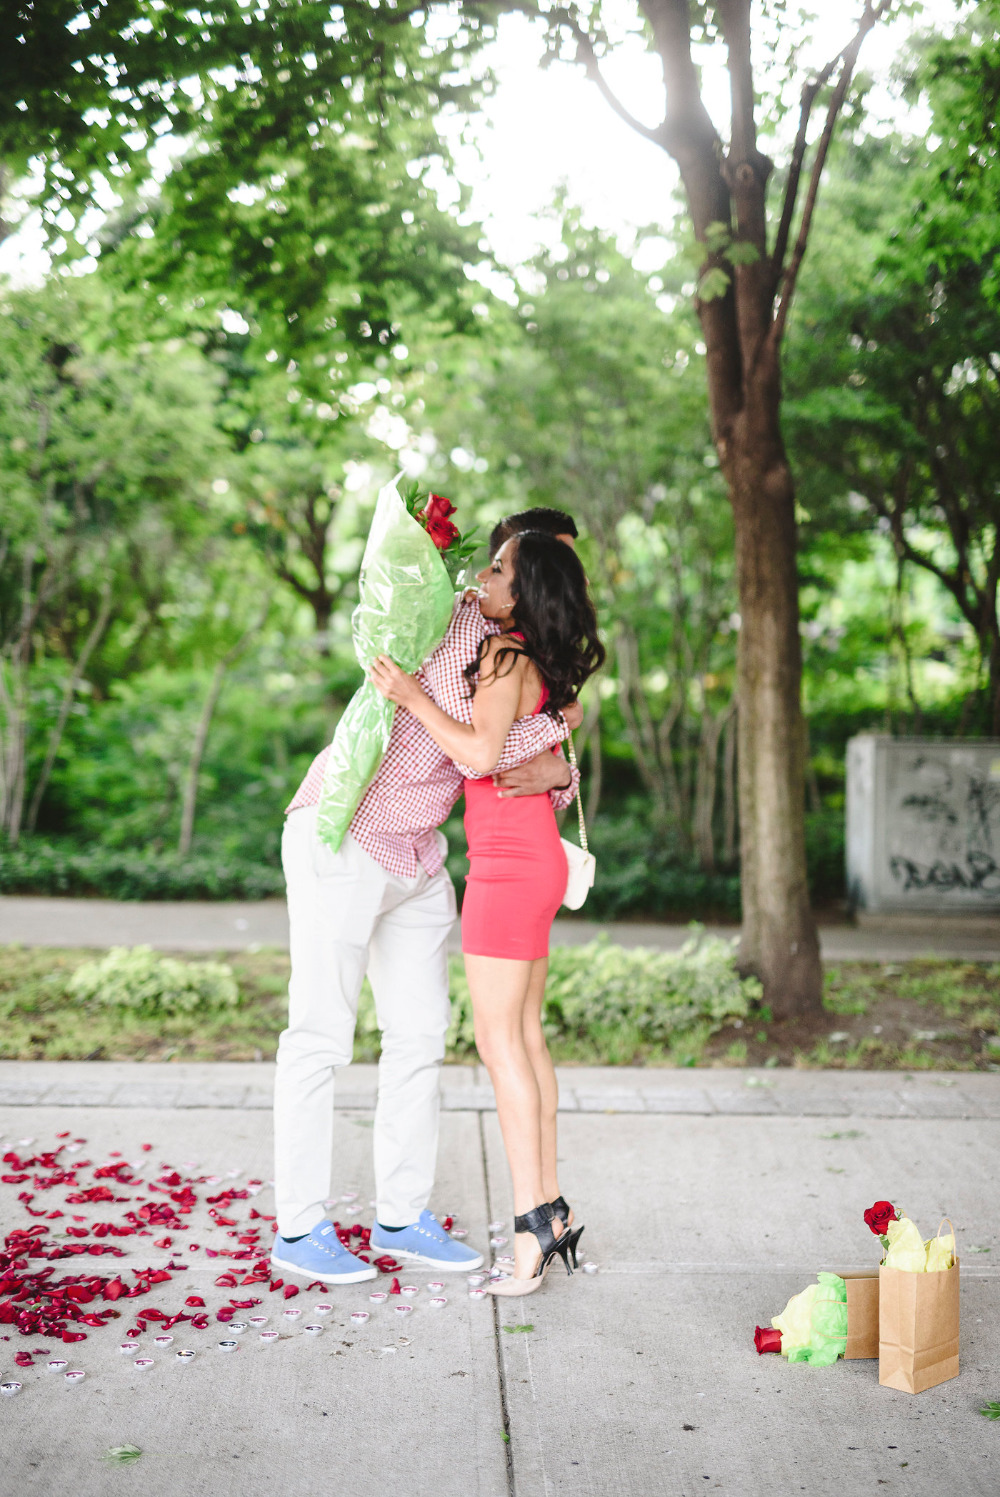 romantic proposal in Toronto Music gardens